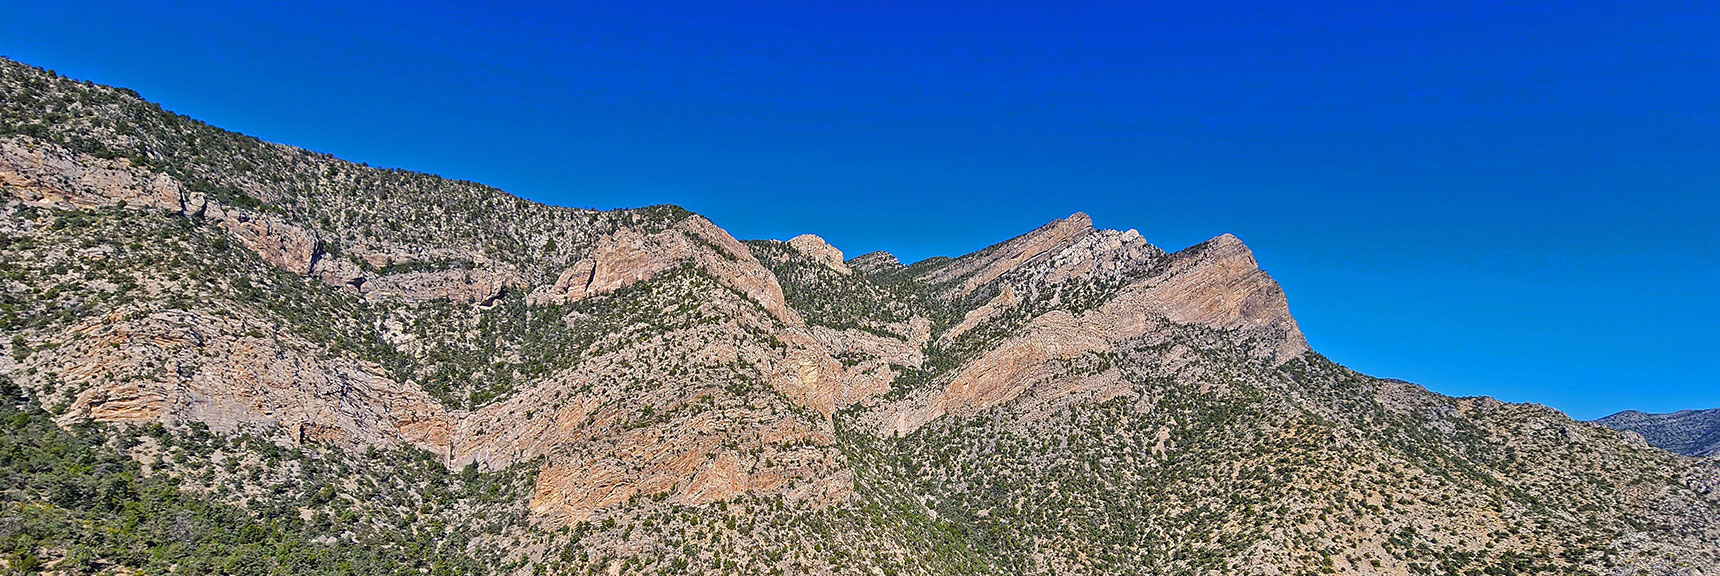 Cliff Wall Guarding Wilson Ridge Summit | Switchback Spring Ridge | Red Rock Canyon, Nevada